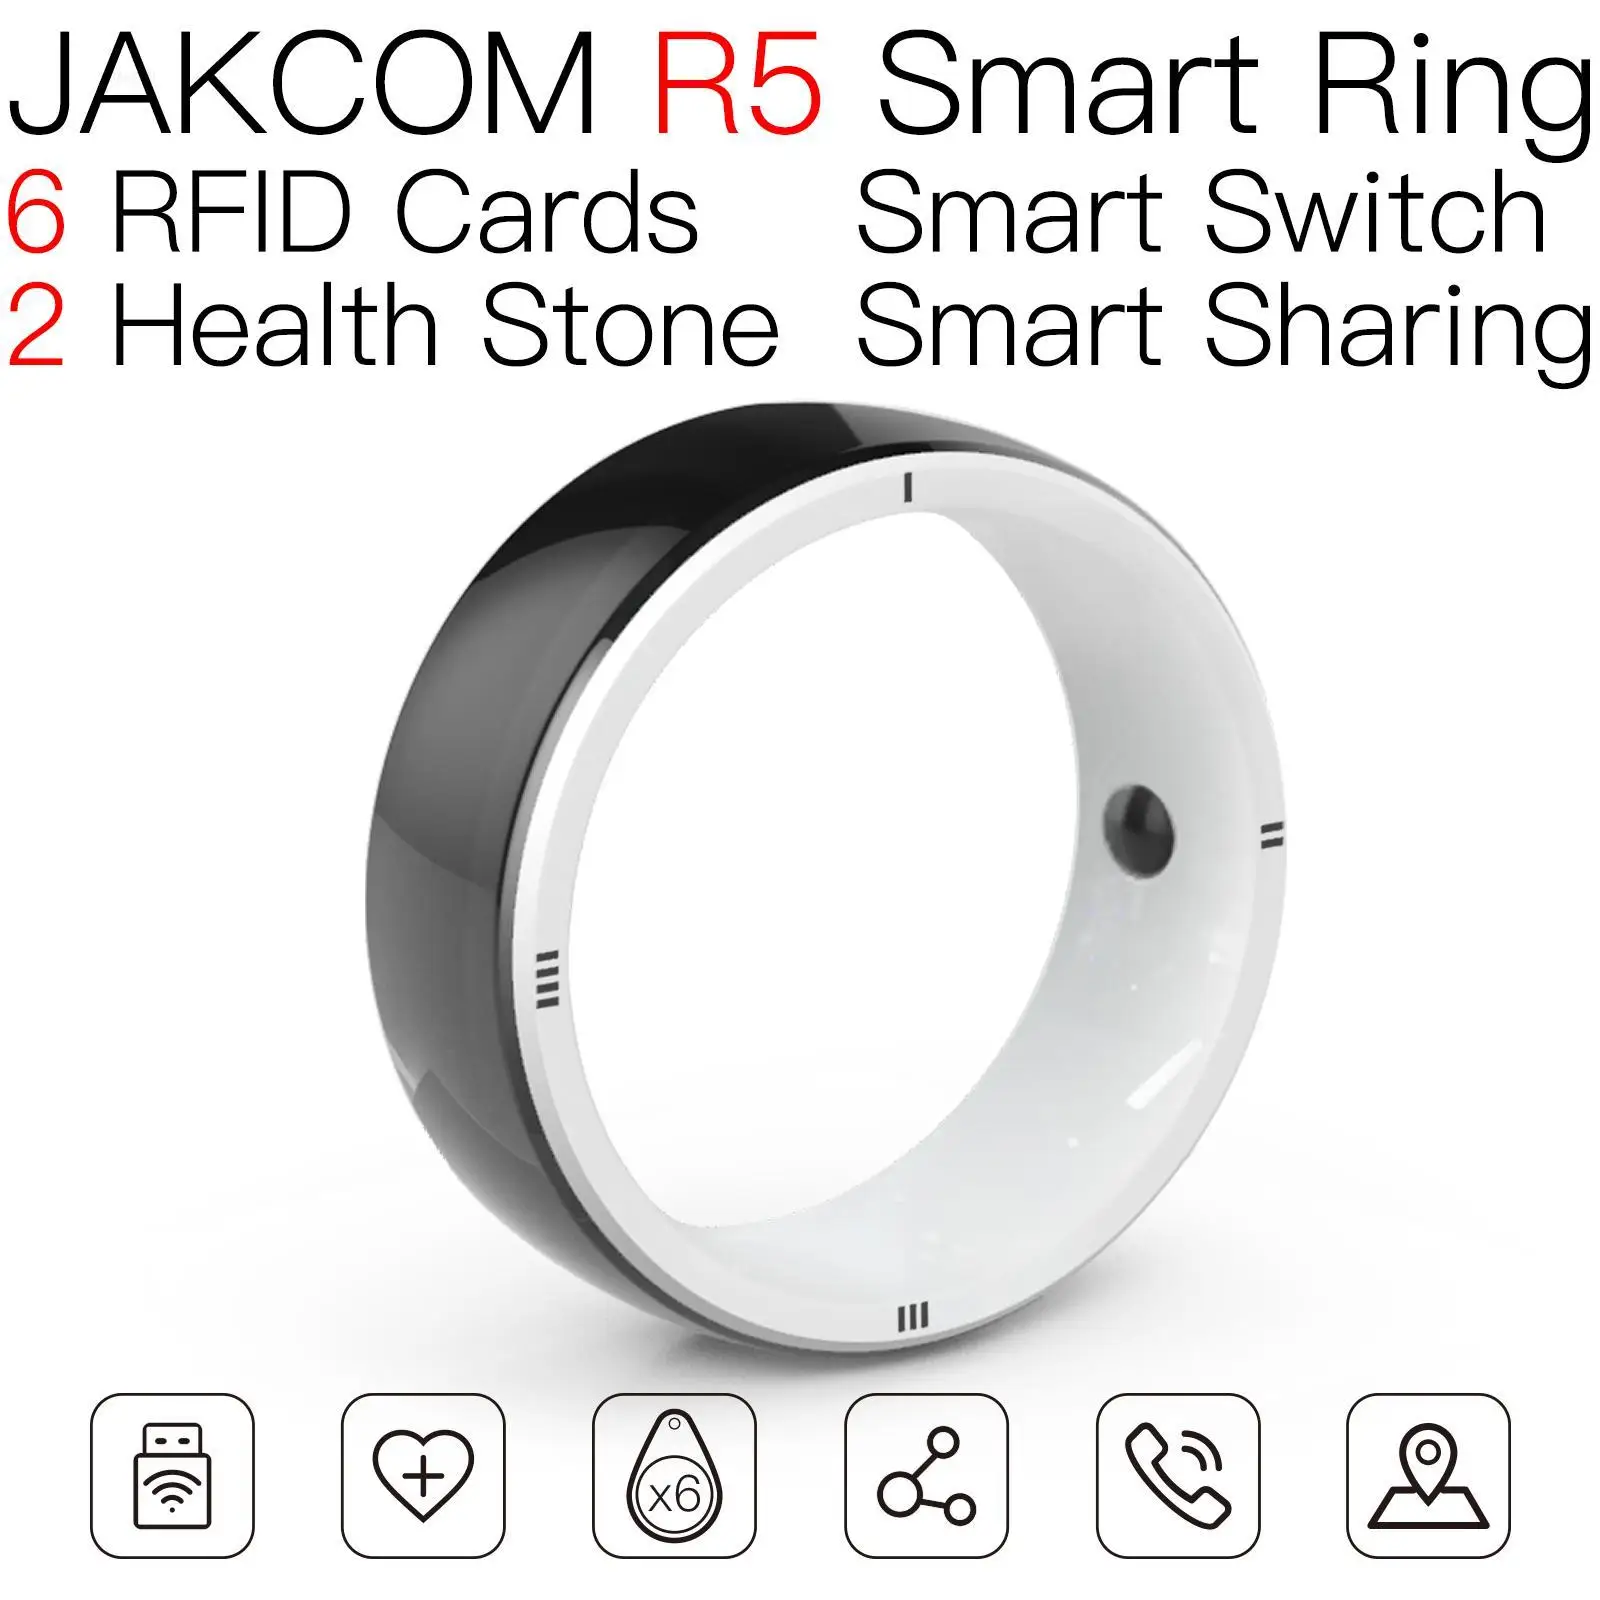 

JAKCOM R5 Smart Ring Match to new zealand pigeon ring carte horizon rfid chip 125khz feuille de mica transparent cards